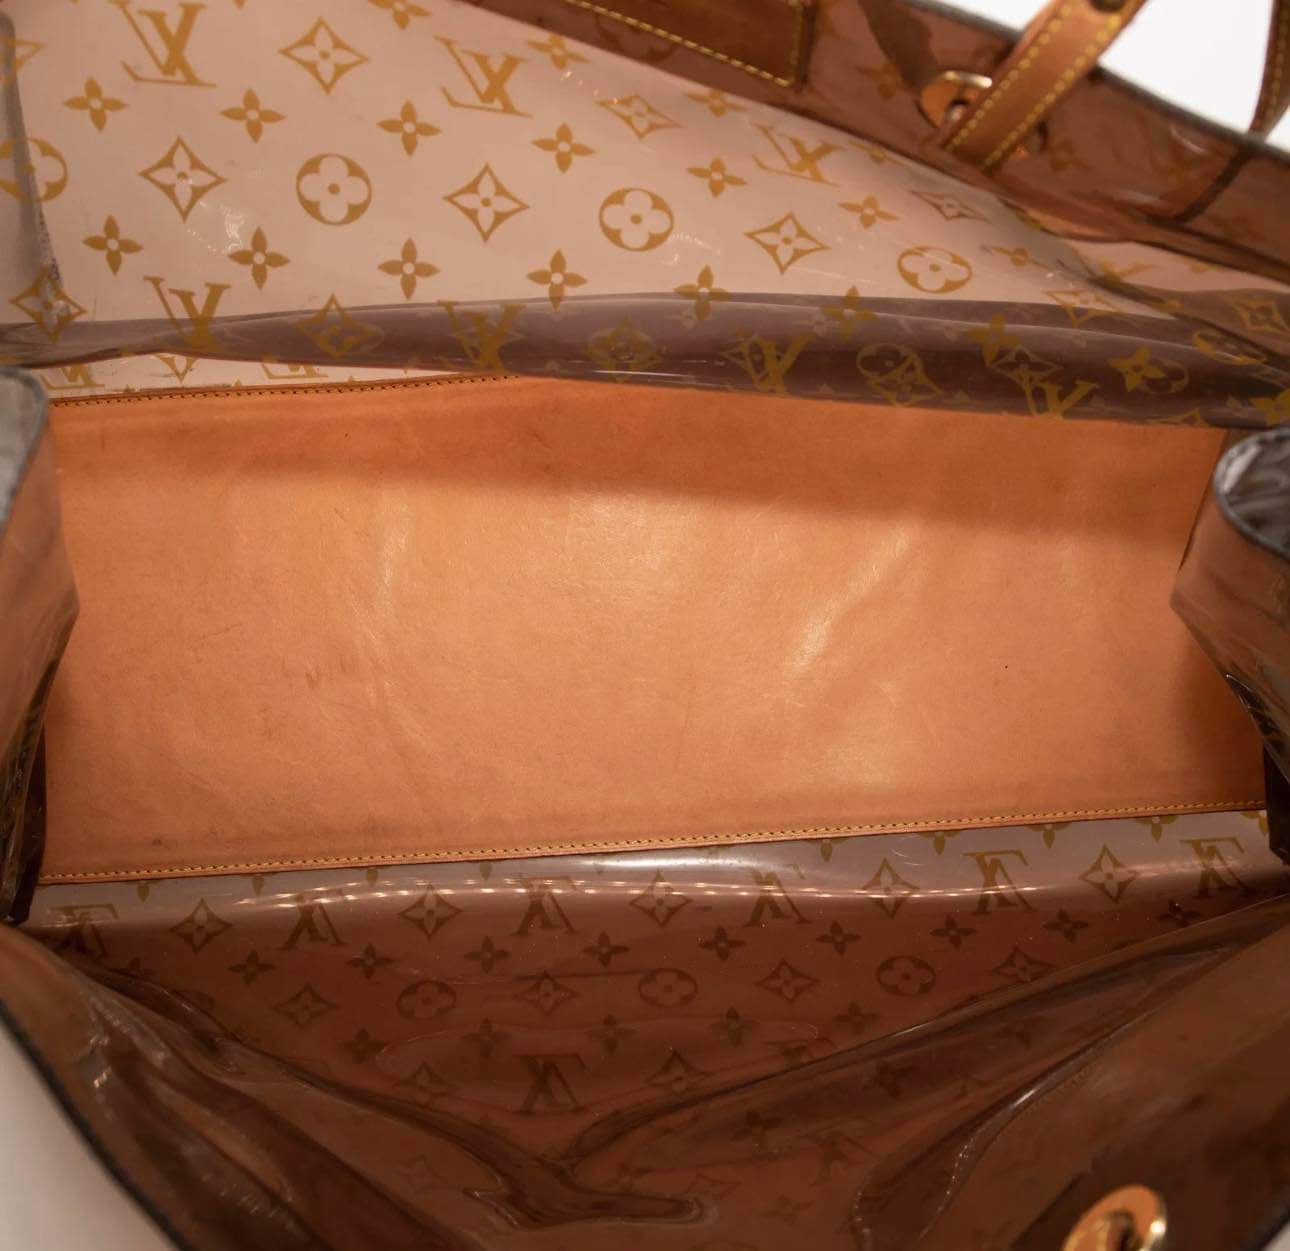 Louis Vuitton Clear Monogram Ambre Sac Cabas Cruise GM Tote Bag